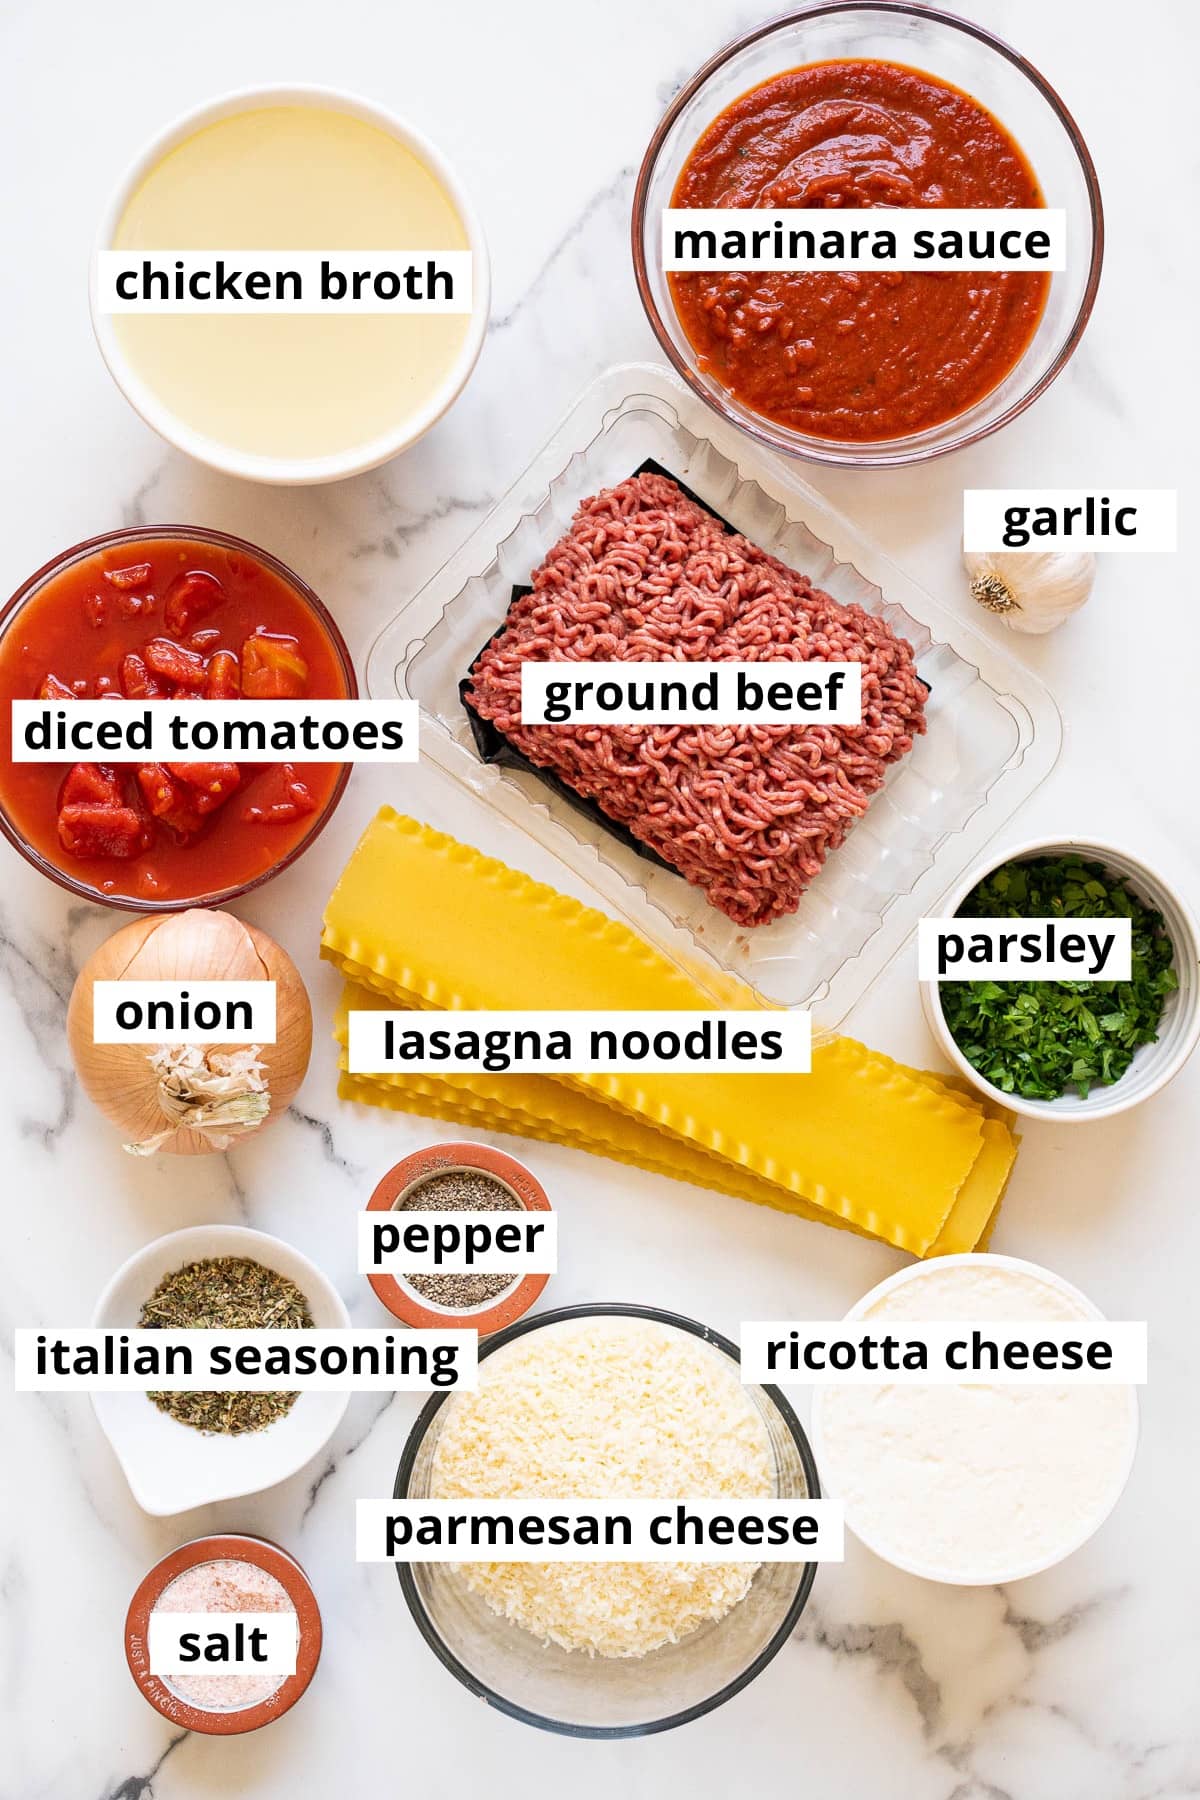 Ground beef, marinara sauce, chicken broth, diced tomatoes, garlic, onion, lasagna noodles, parsley, ricotta cheese, parmesan cheese, Italian seasoning, salt and pepper.